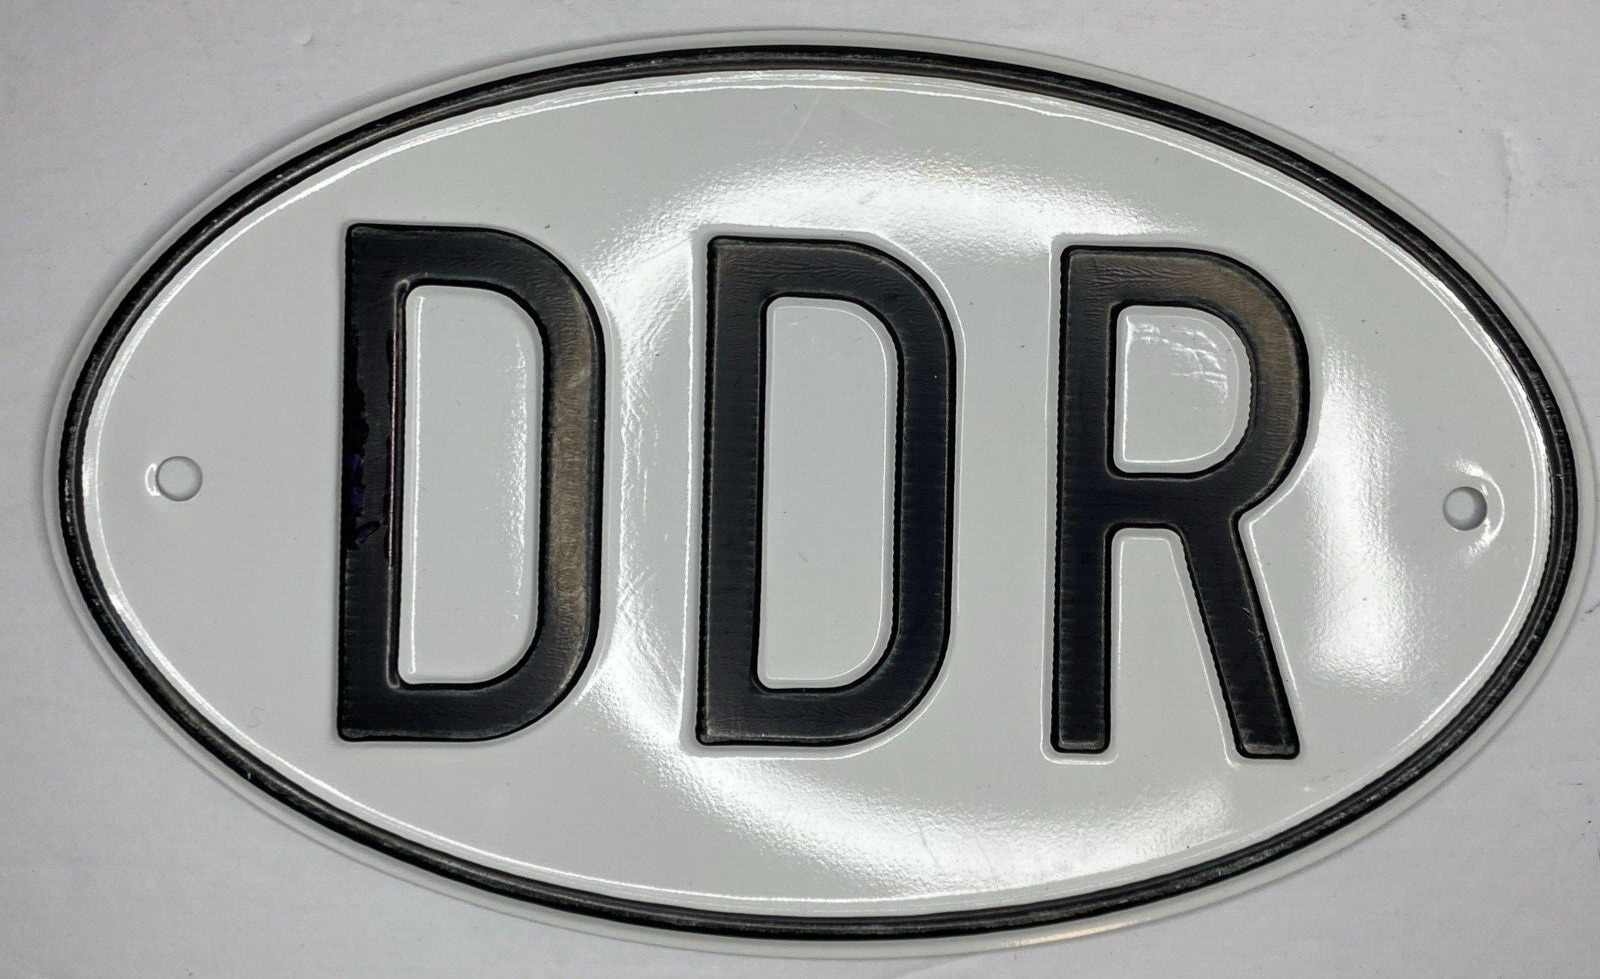 DDR White Oval Auto License Plate German Democratic Republic E. Germany (Soviet)